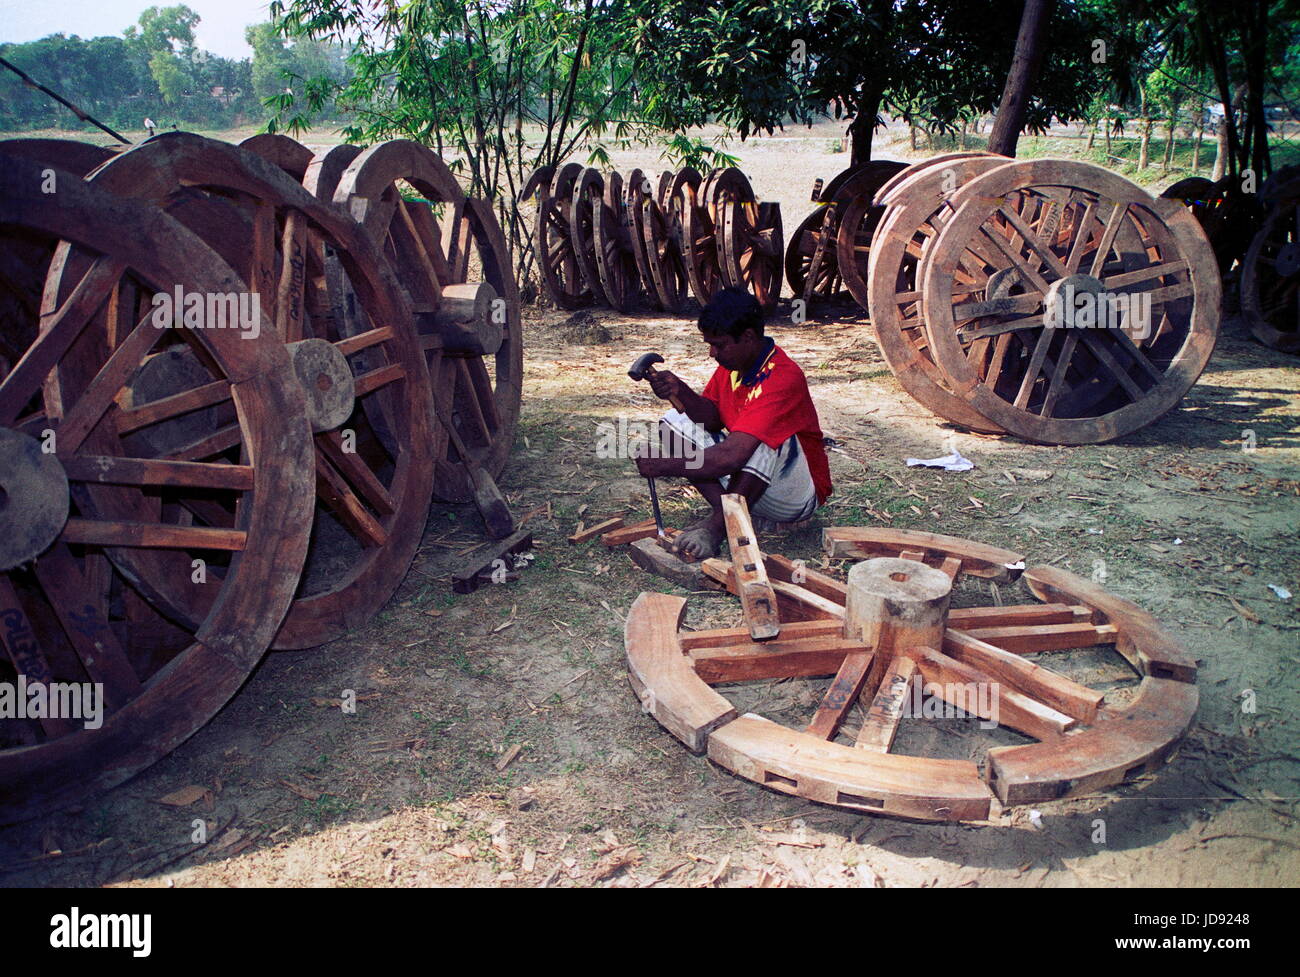 wood craft wheels